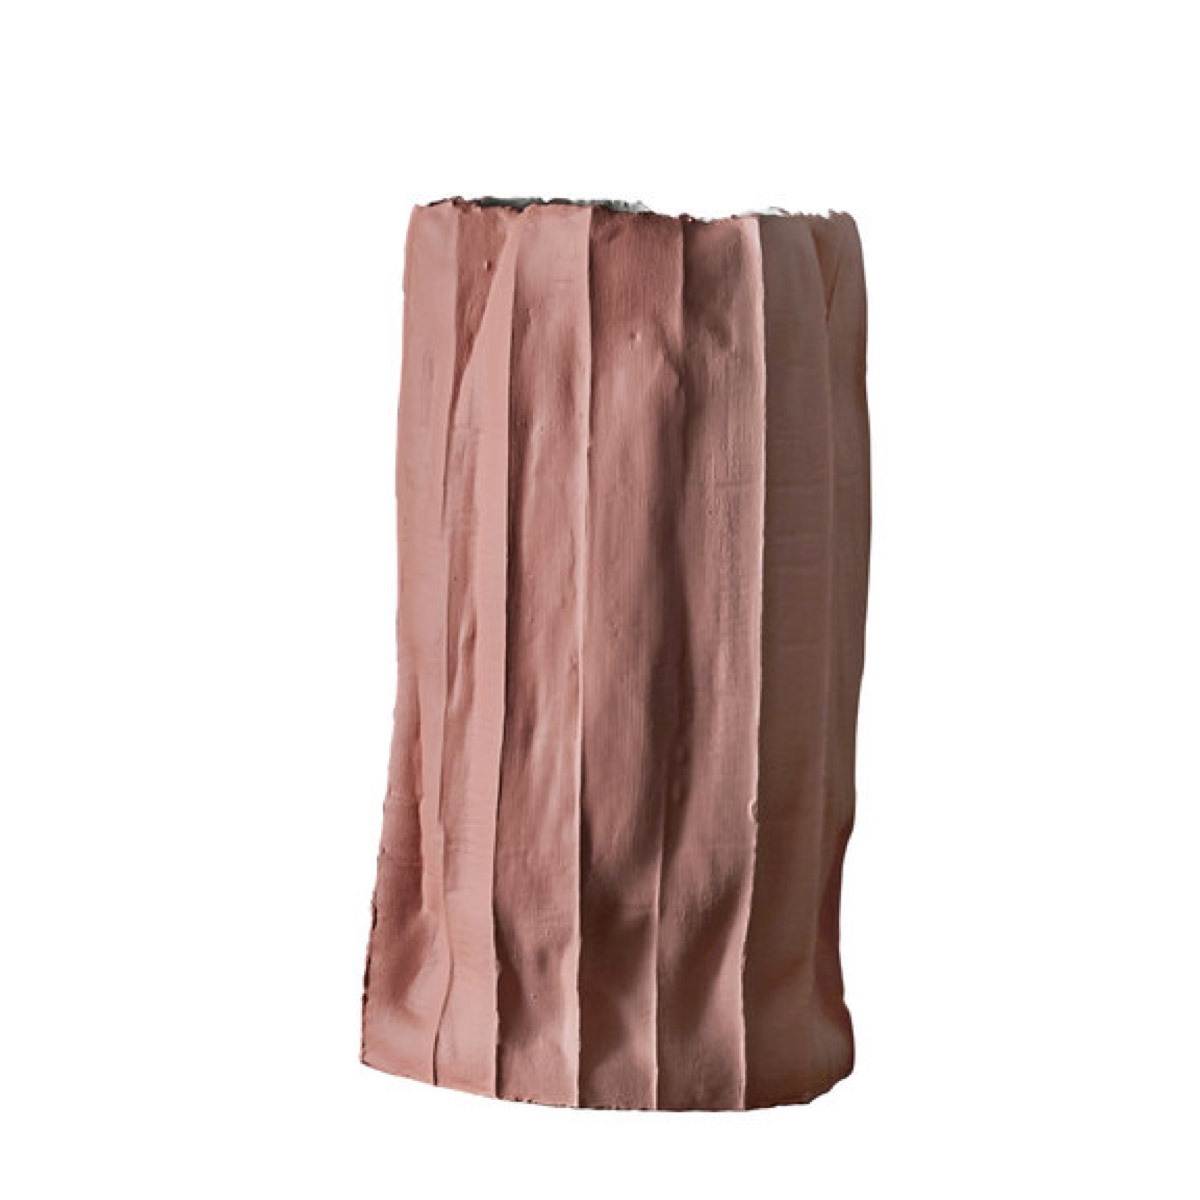 Ninfea Corteccia Tall Pink Vase